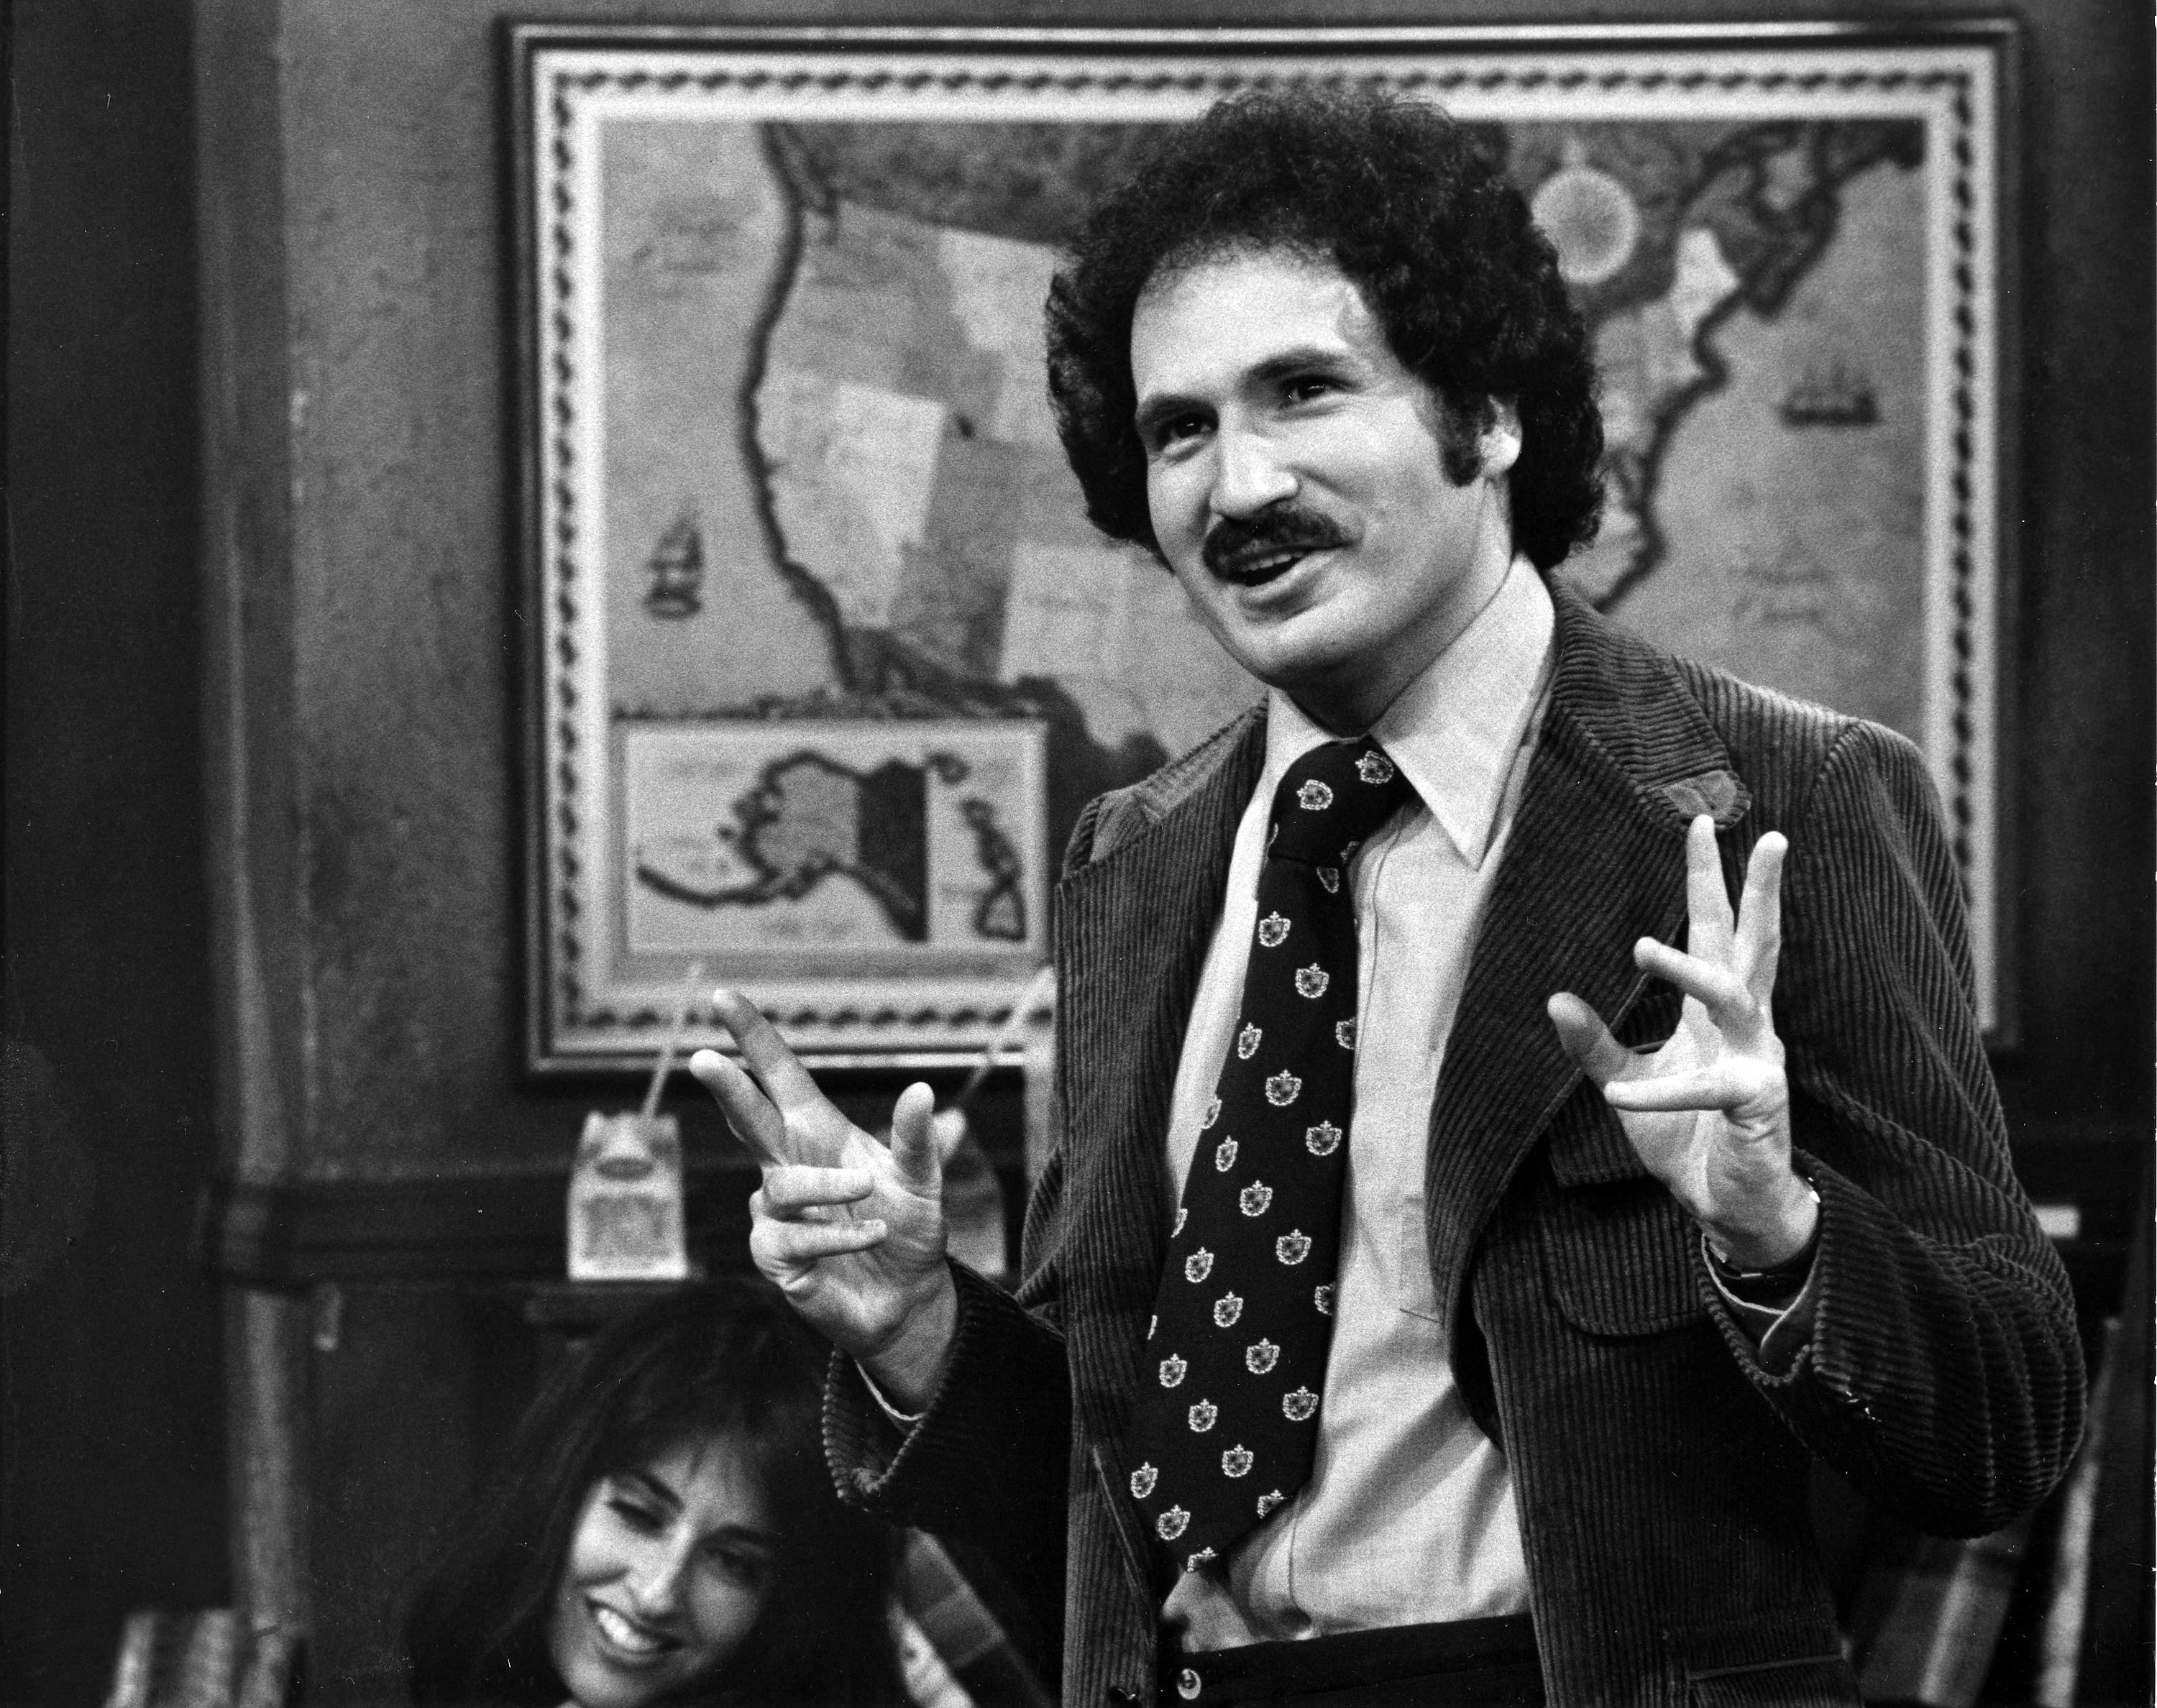 Gabe Kaplan on the set of "Welcome Back, Kotter" on September 16, 1975 | Source: Getty Images